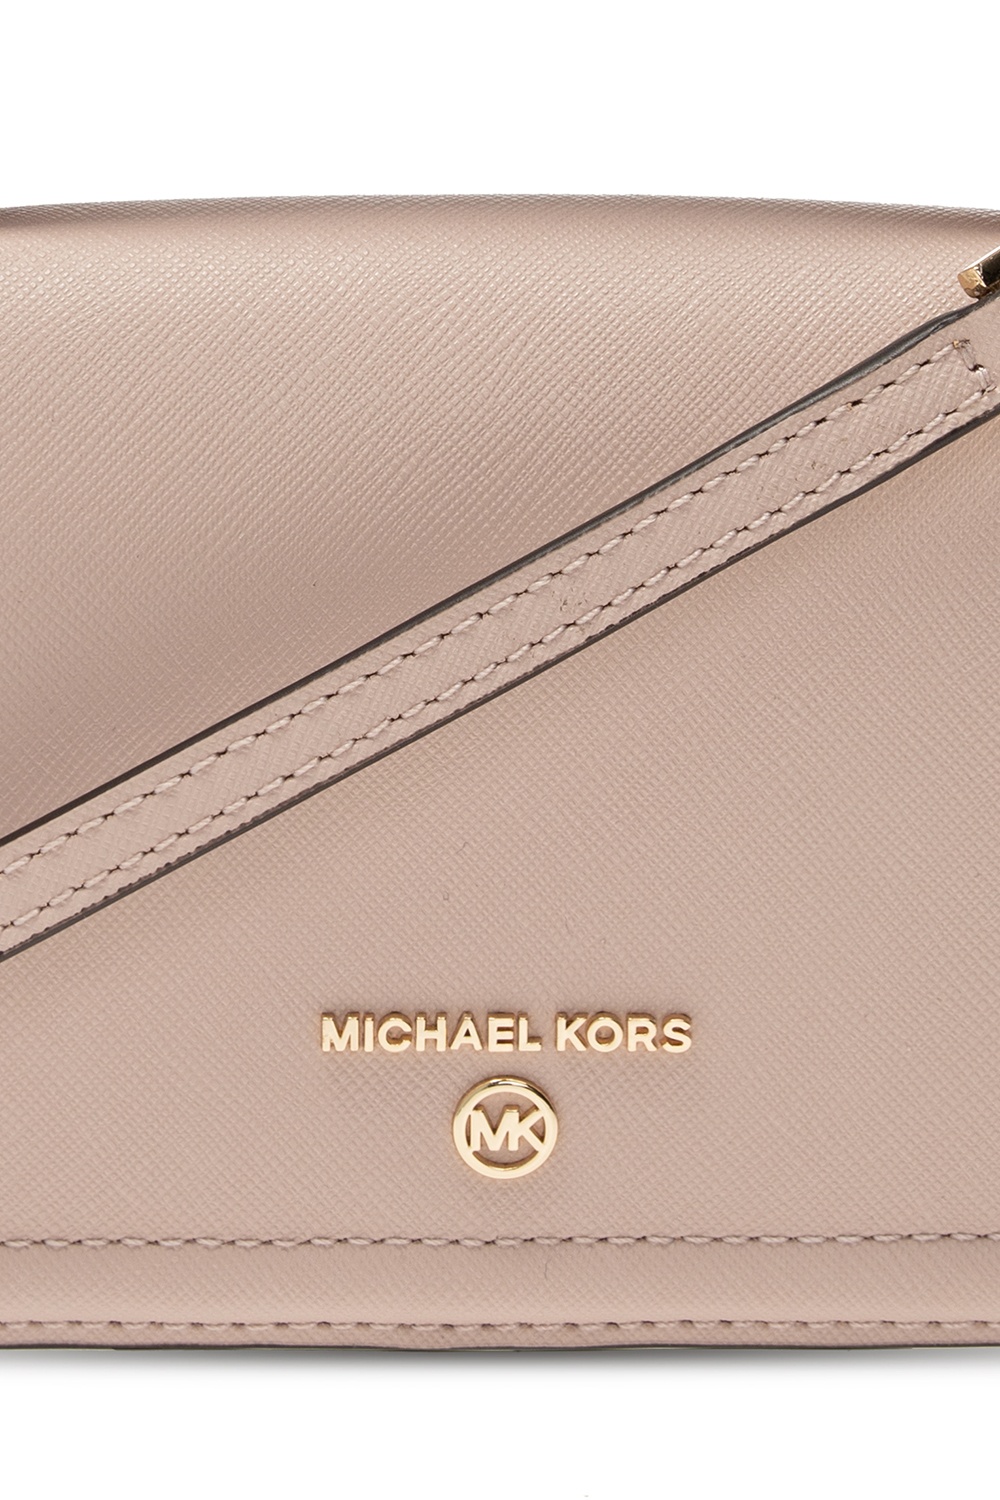 Michael Kors Bags | Michael Kors Jet Set XL Zip Clutch Wristlet Brown | Color: Brown/White | Size: Os | Mybagobsession's Closet